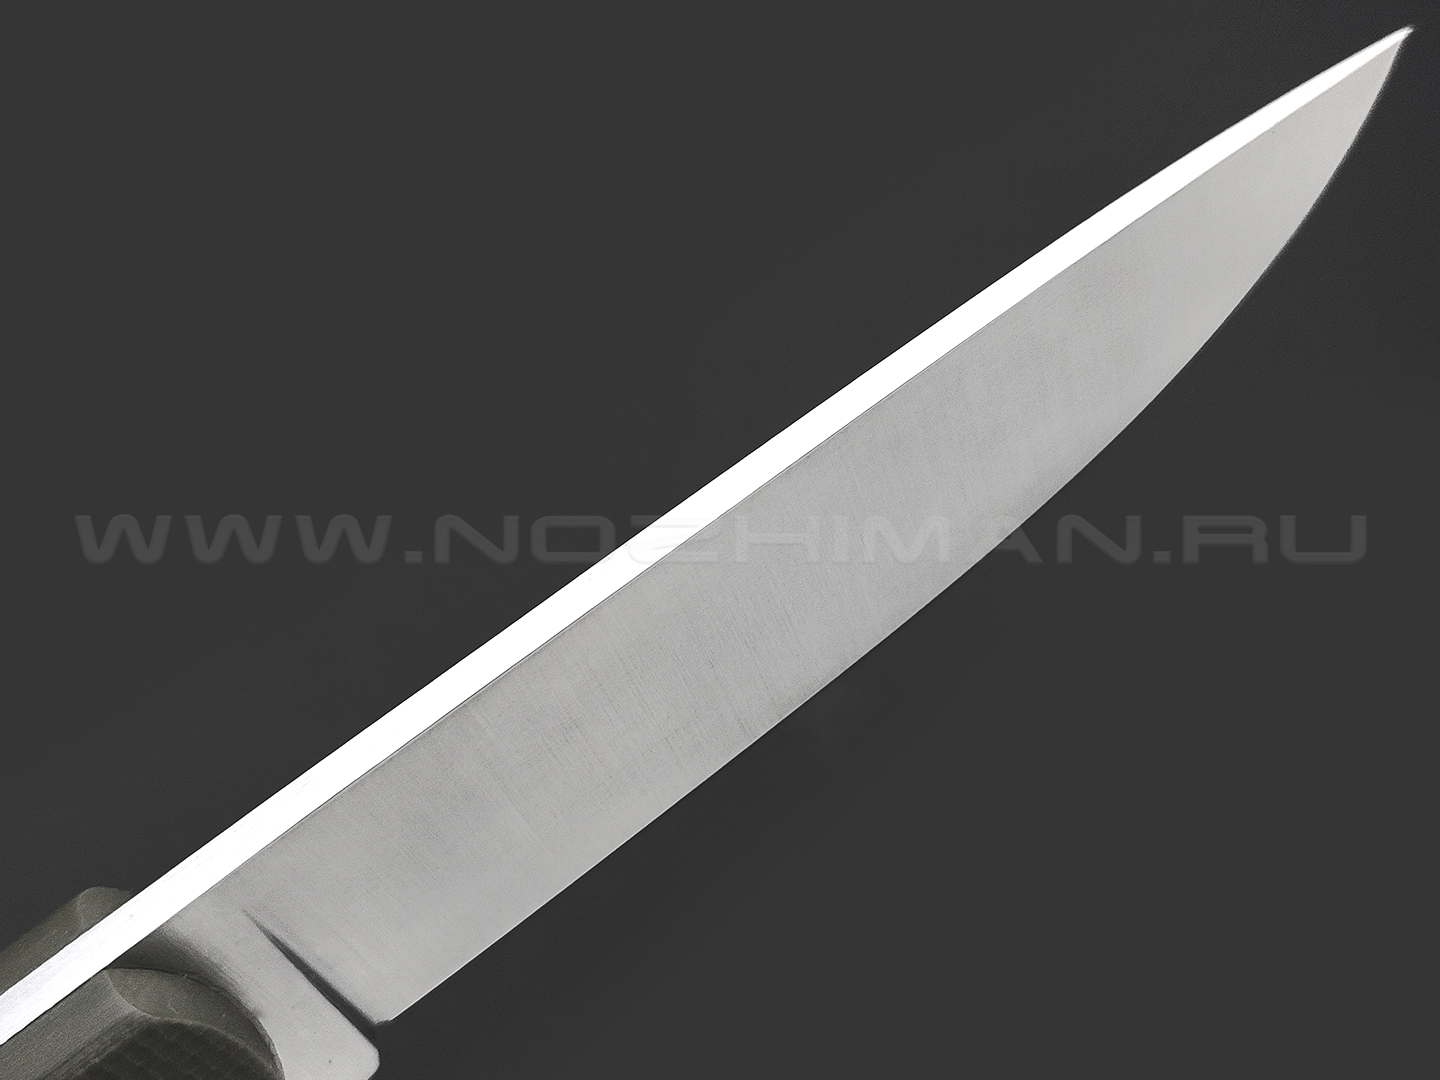 Нож Burlax Fin BX0156 сталь Cryo Aus-8 satin, рукоять G10 od green